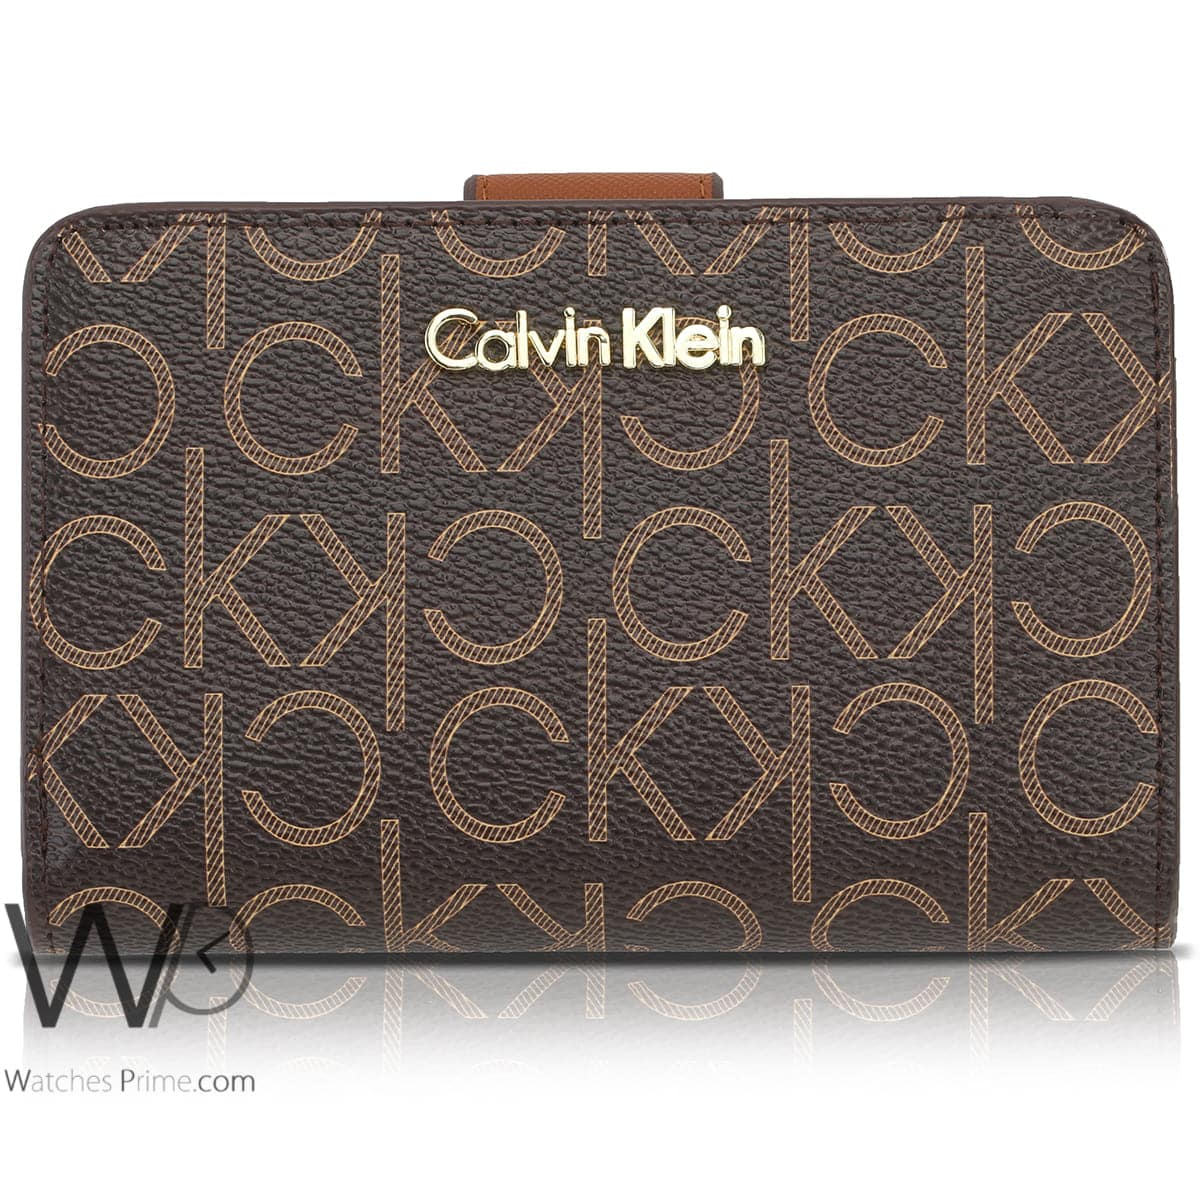 Draaien Verblinding Groot Calvin Klein CK Wallet Original Brown women | Watches Prime